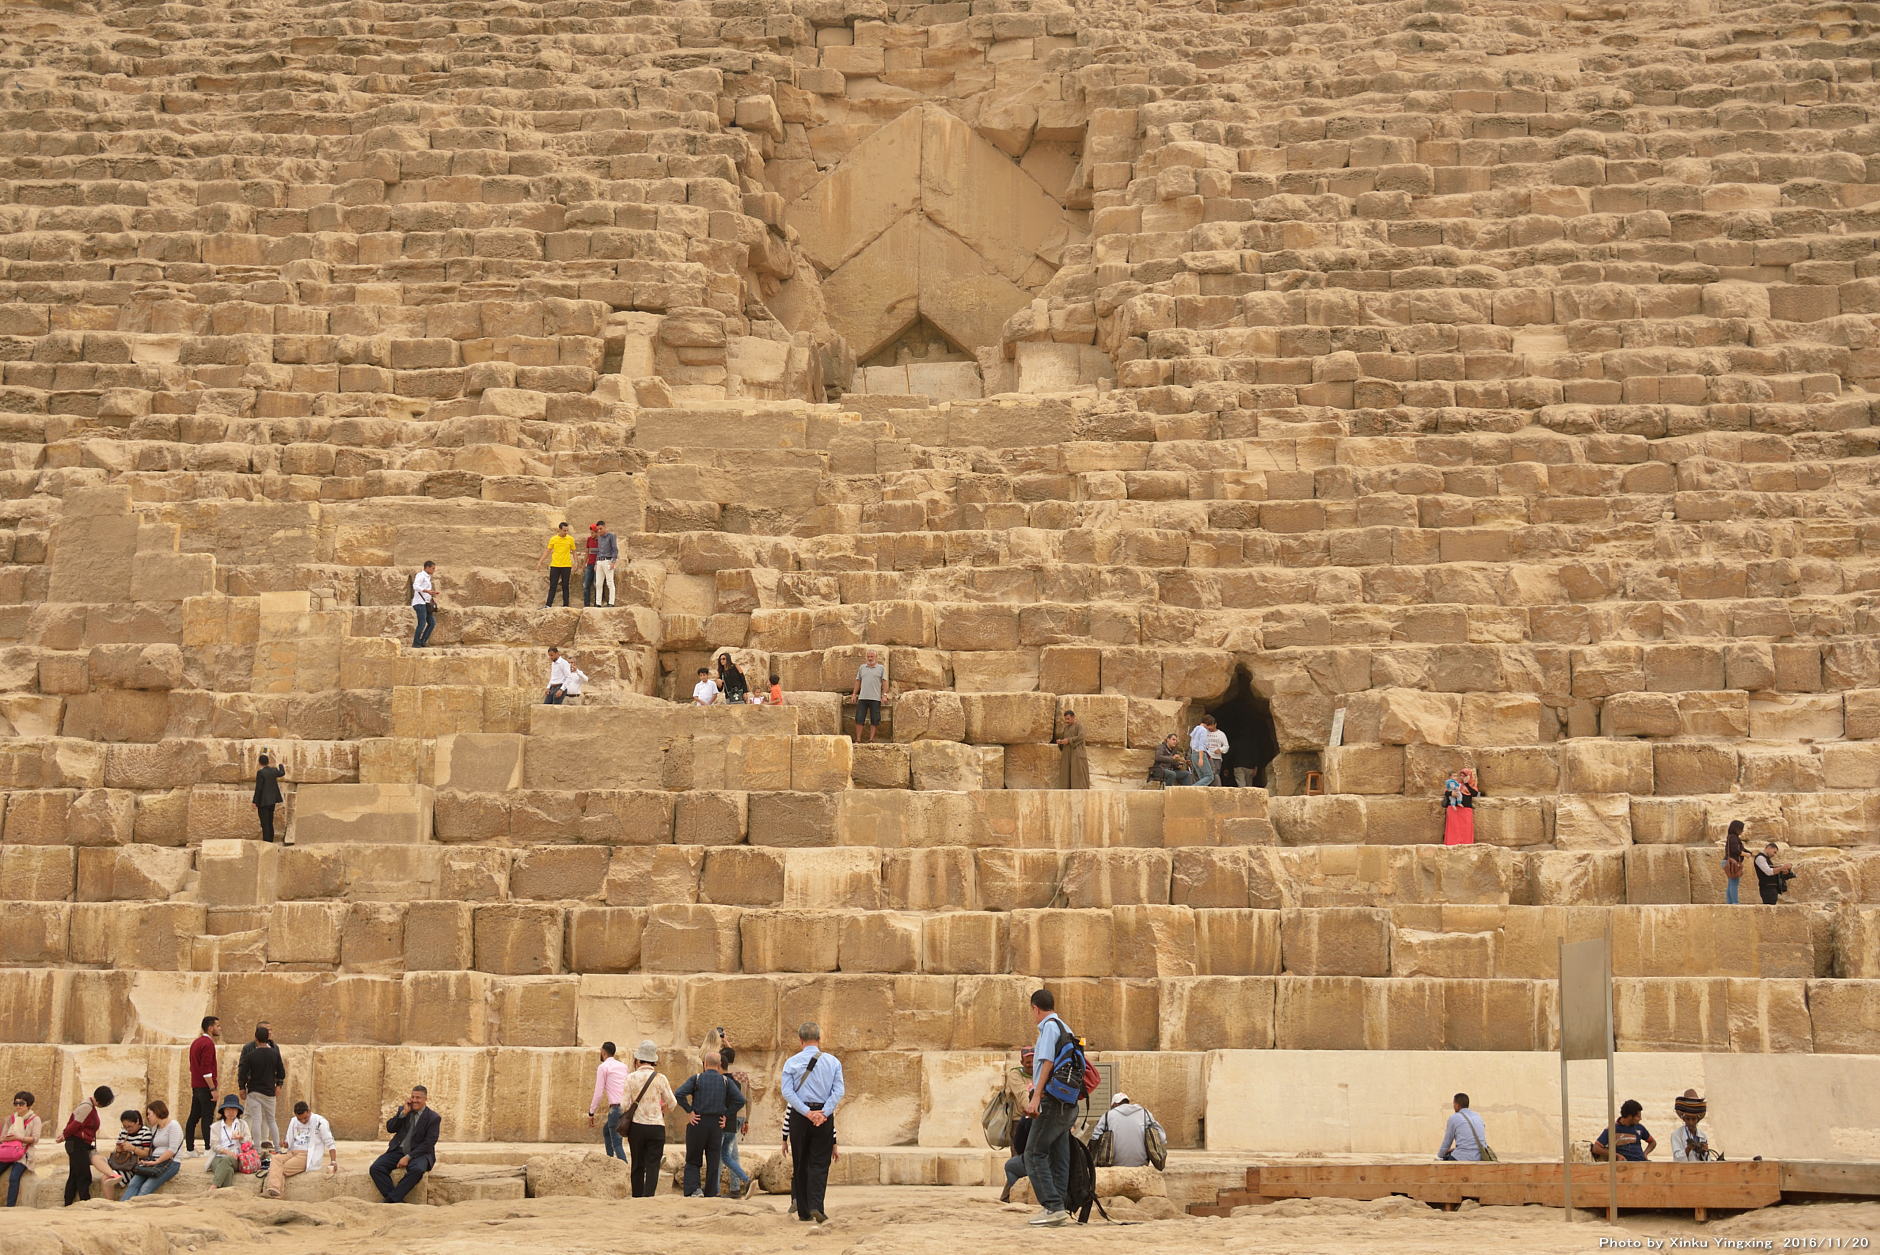 E Aruki いい歩き クフ王のピラミッド カフラー王のピラミッド ギザの３大ピラミッド メンフィスとその墓地遺跡 エジプト世界遺産